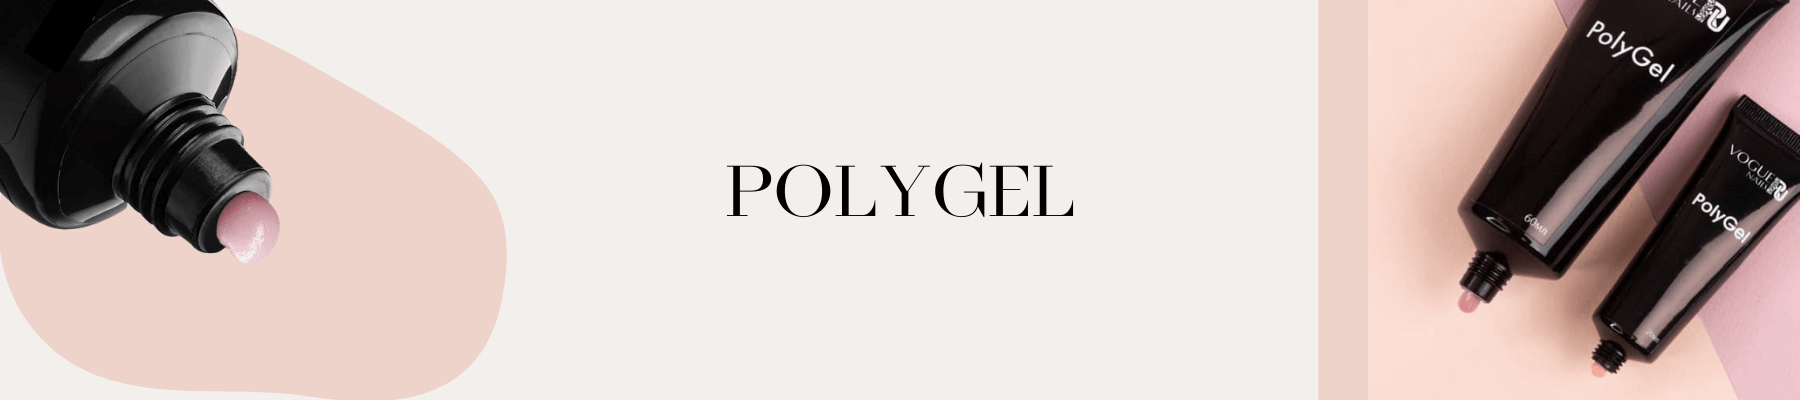 Polygel, Acrygel